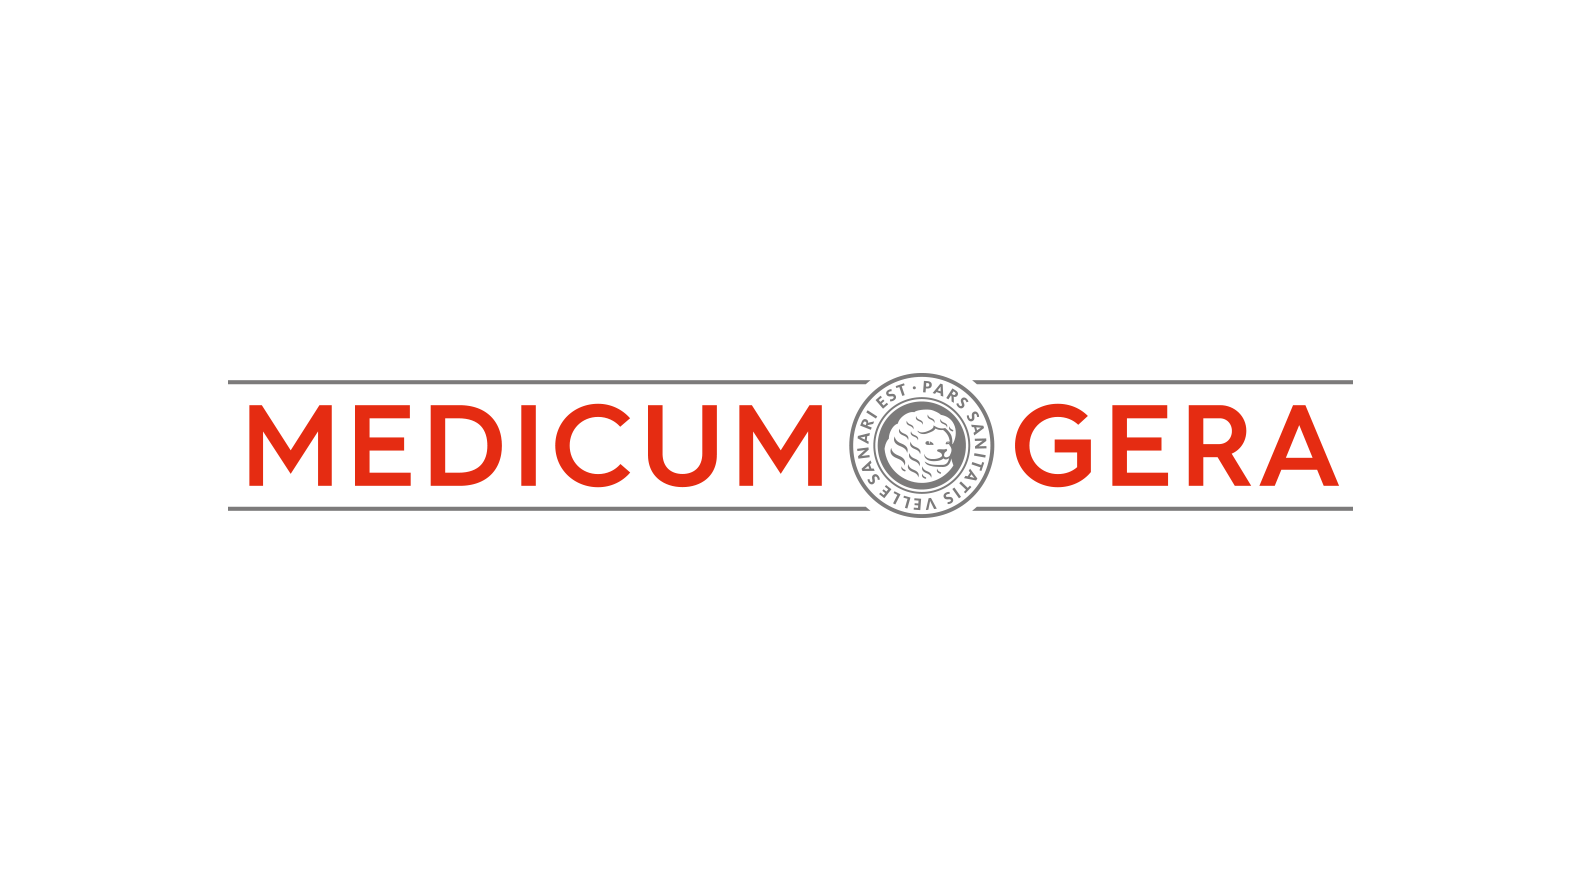 Medicum, Gera